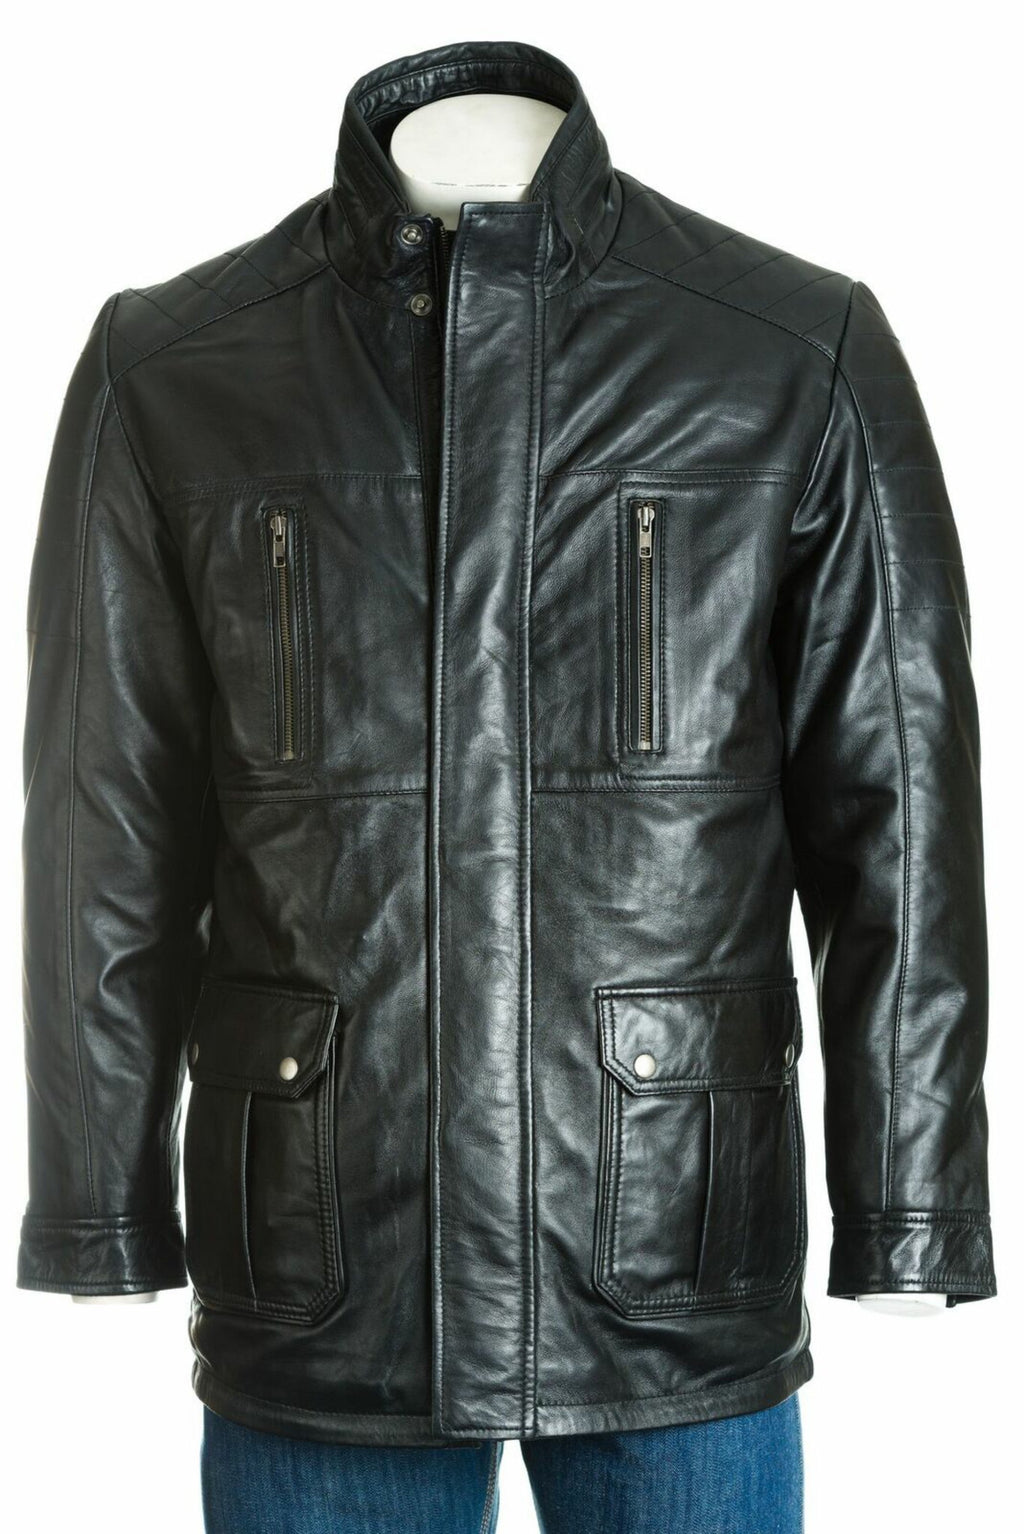 Men's Black Leather Coat With Shoulder Panel Stitch Detail: Enrico